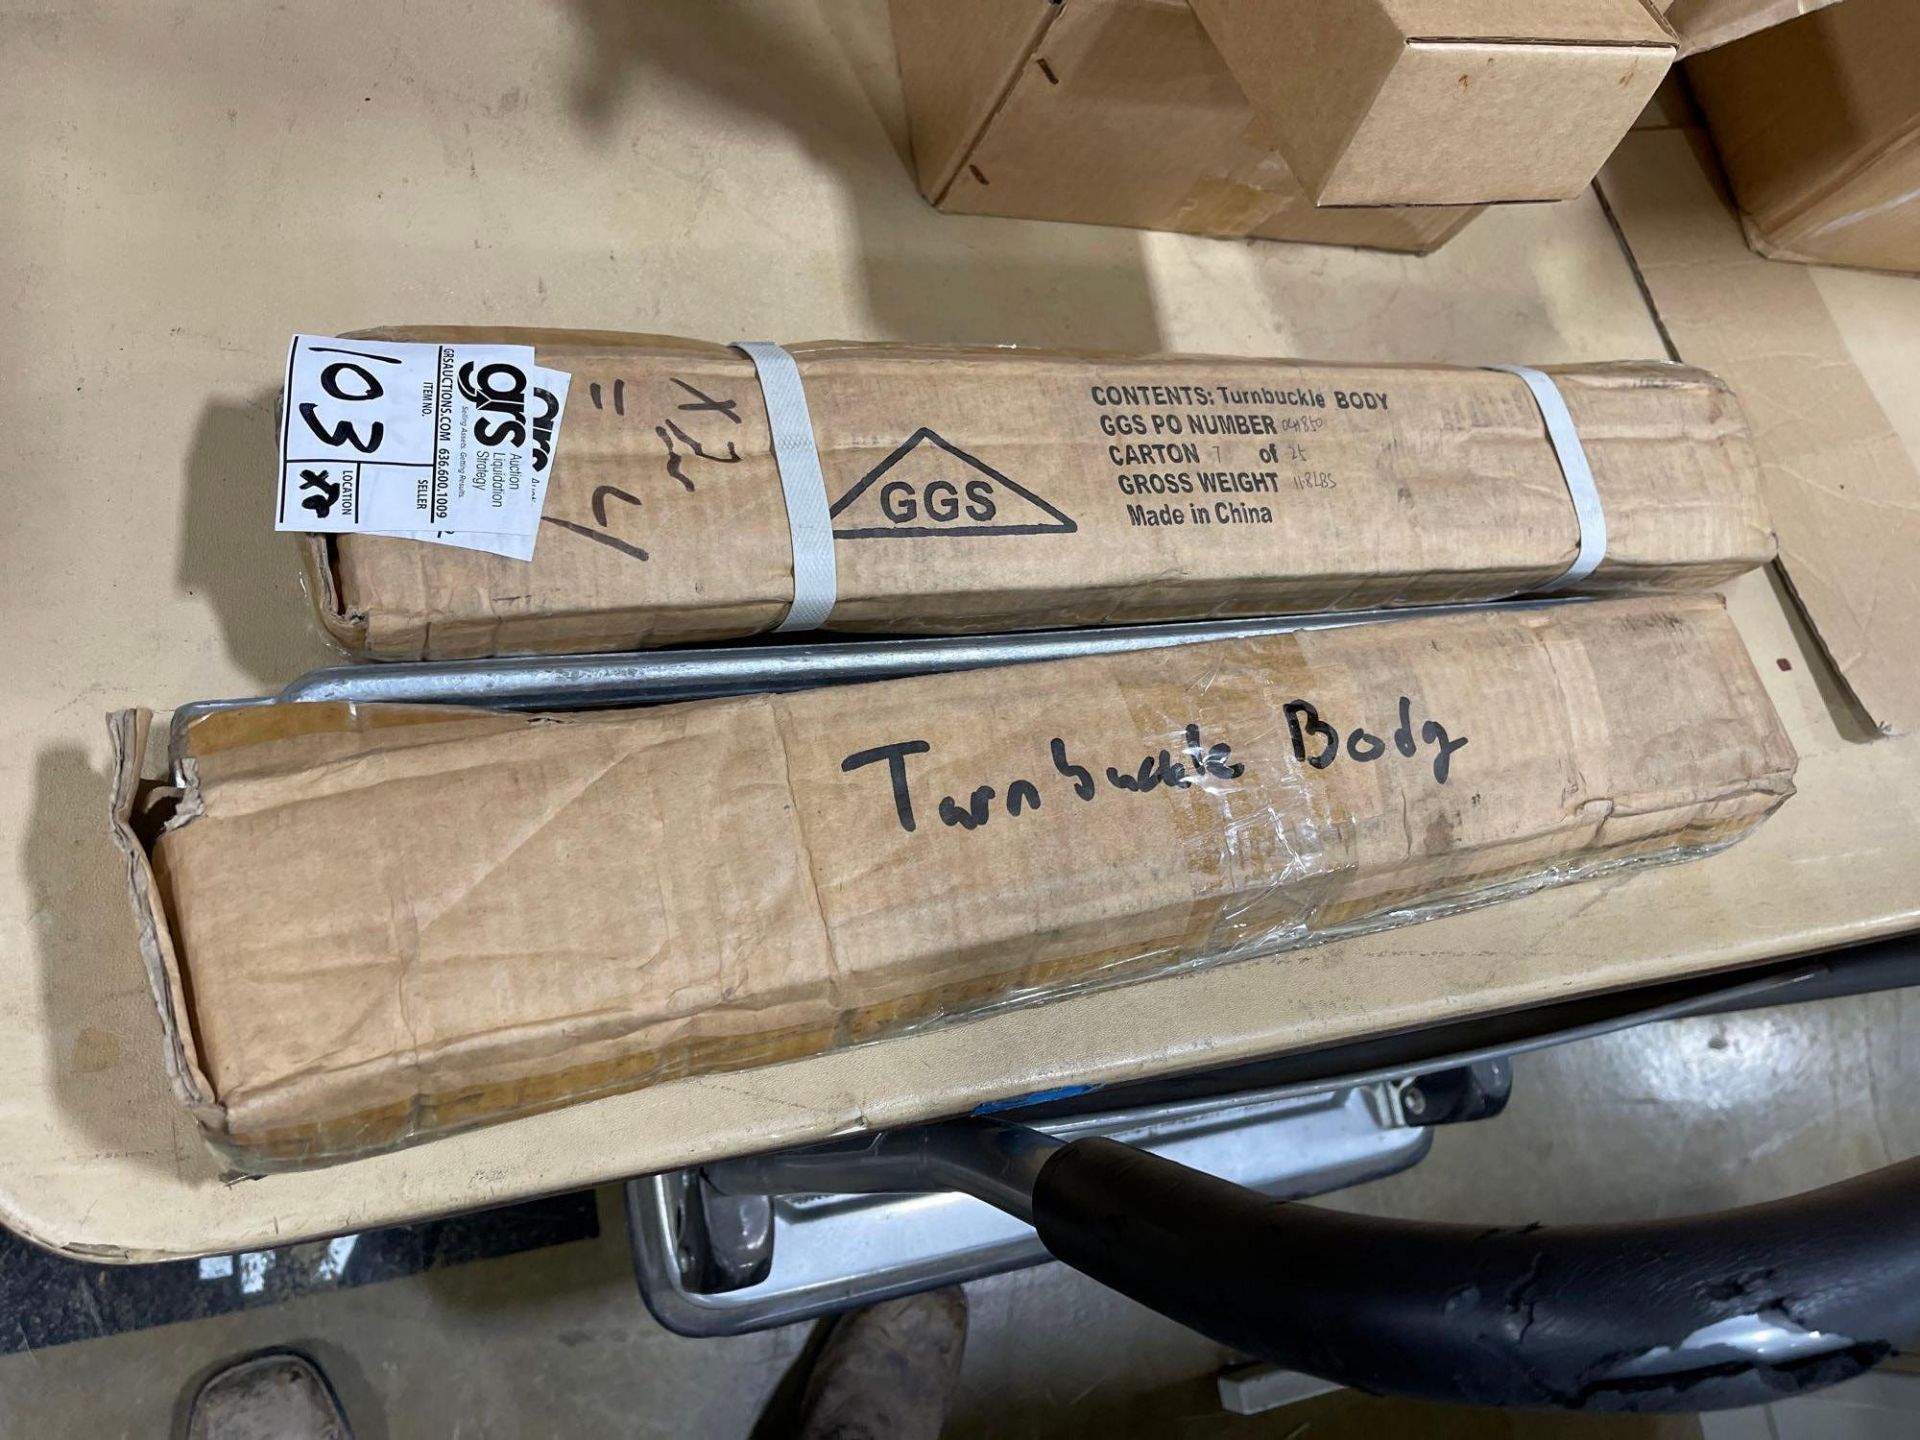 2 Turnbuckle Body - Image 2 of 3